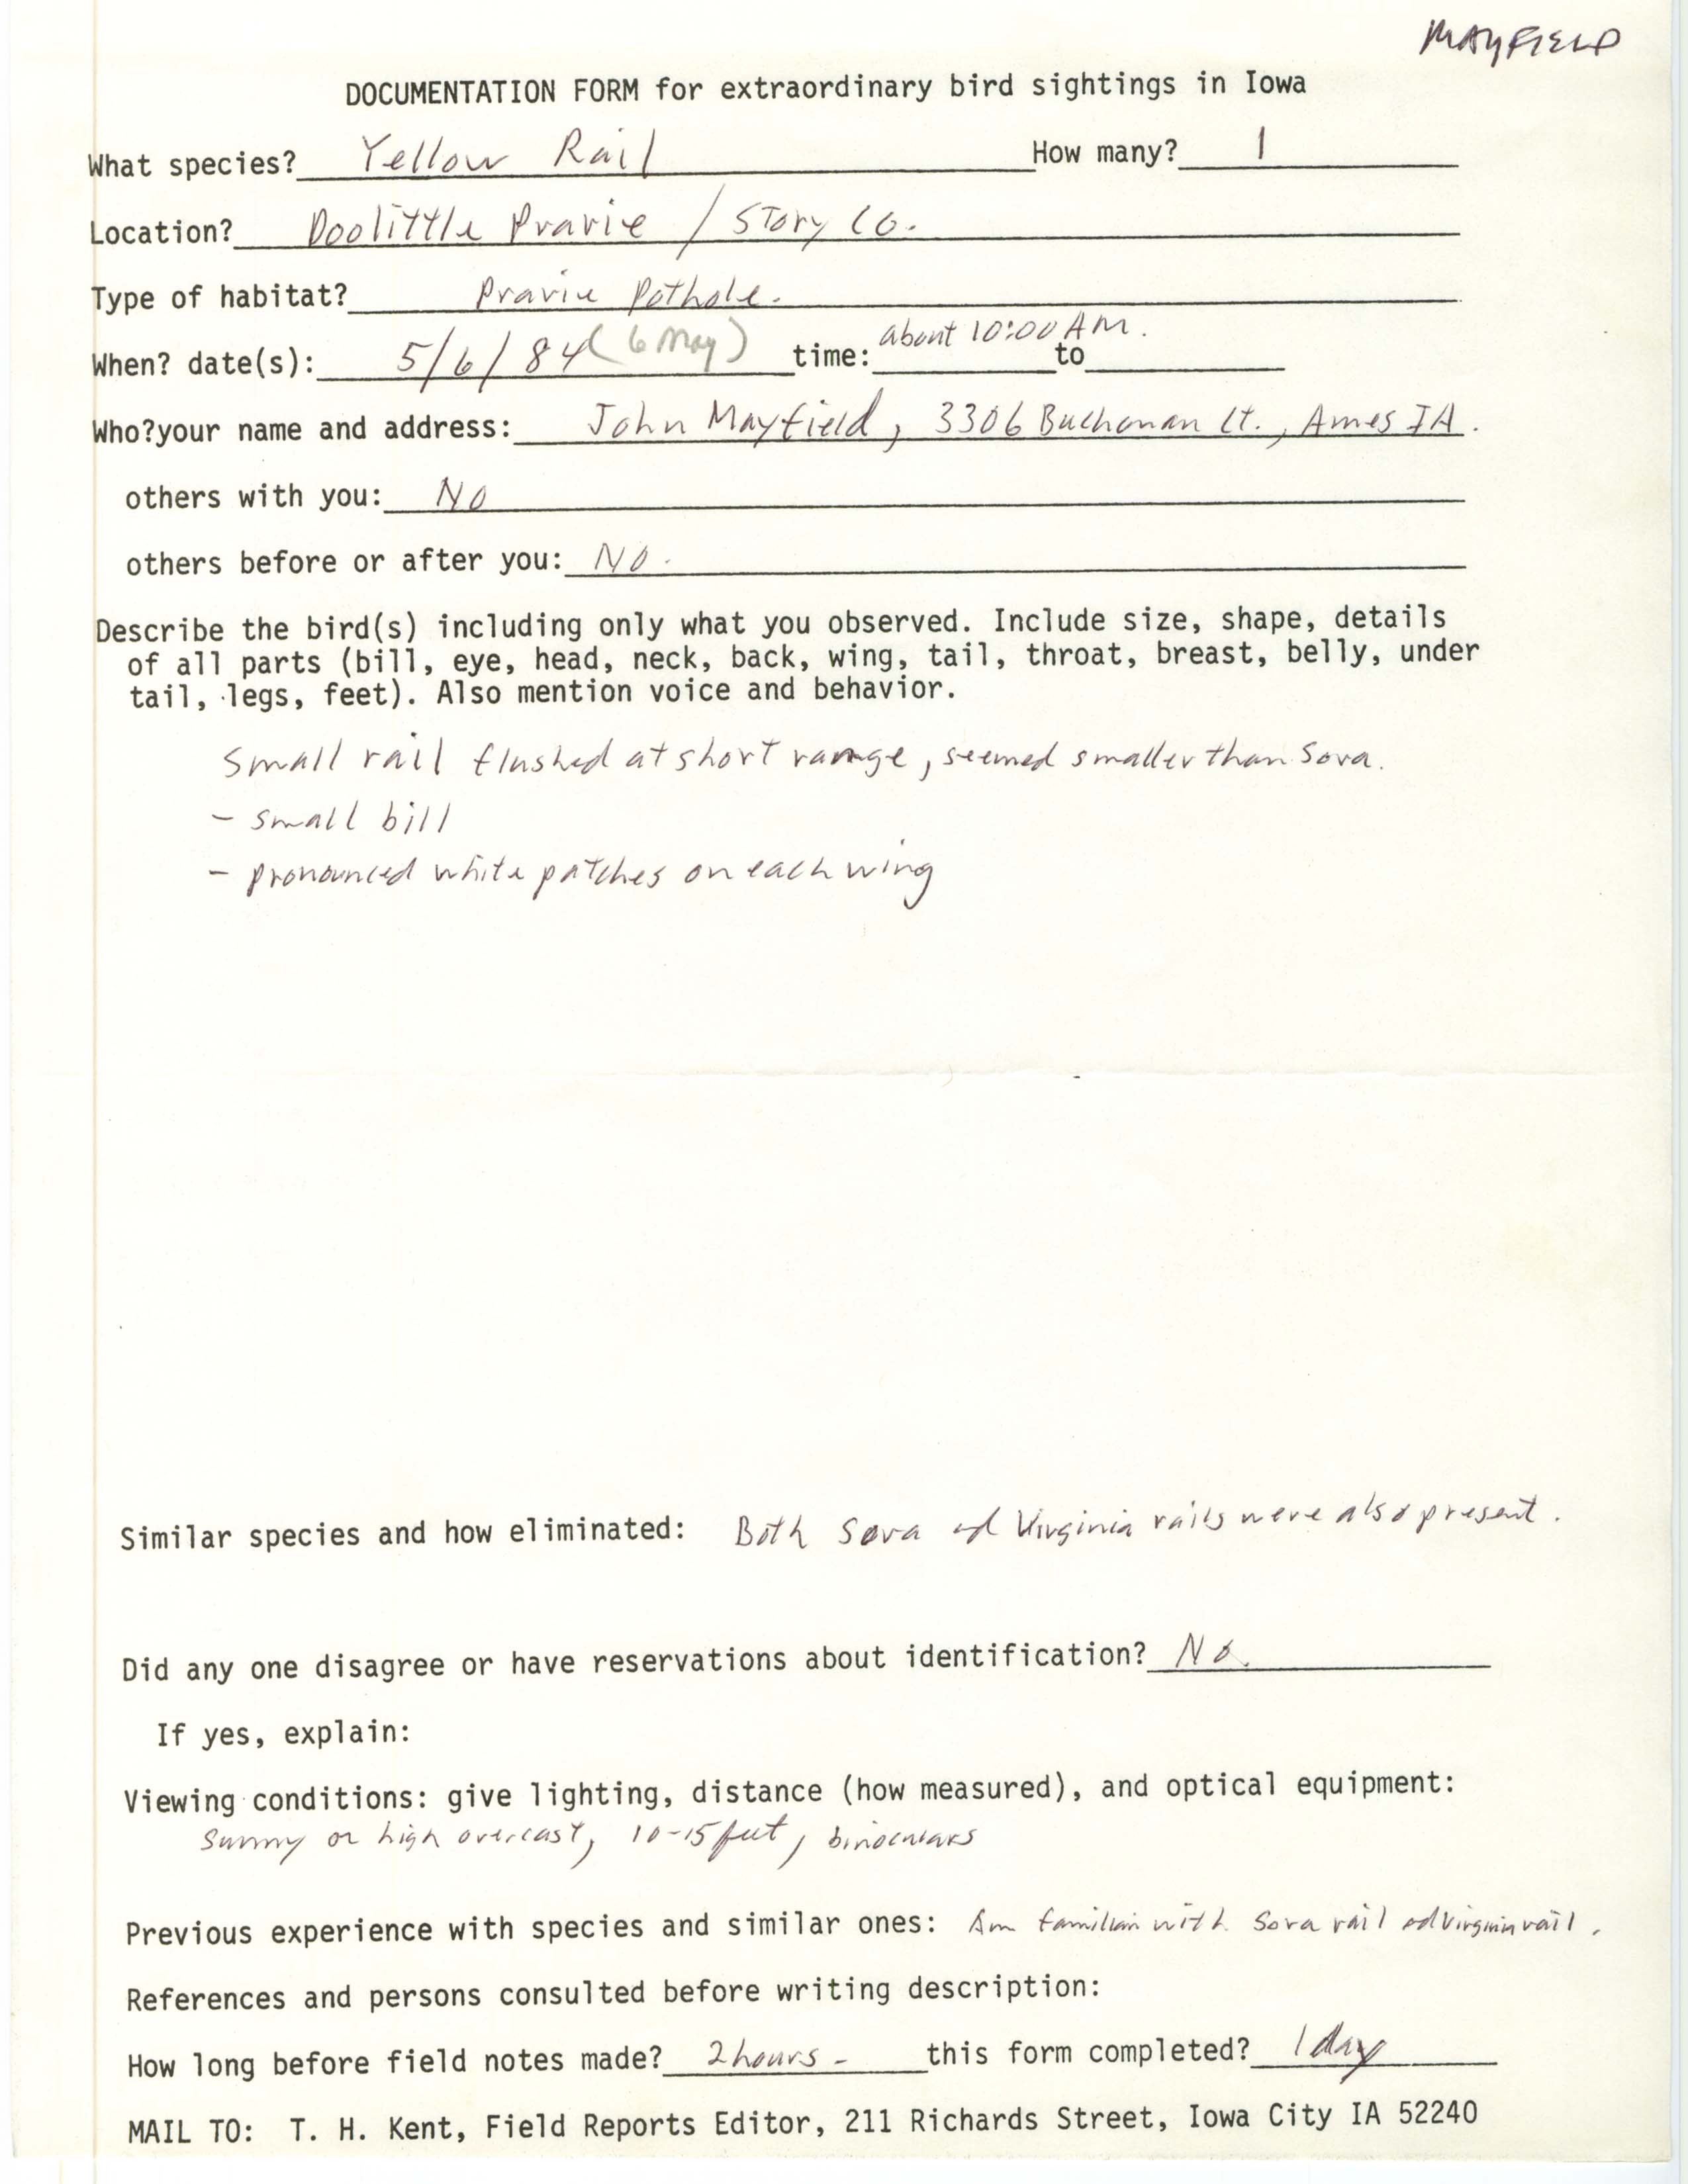 Rare bird documentation form for Yellow Rail at Doolittle Prairie in 1984